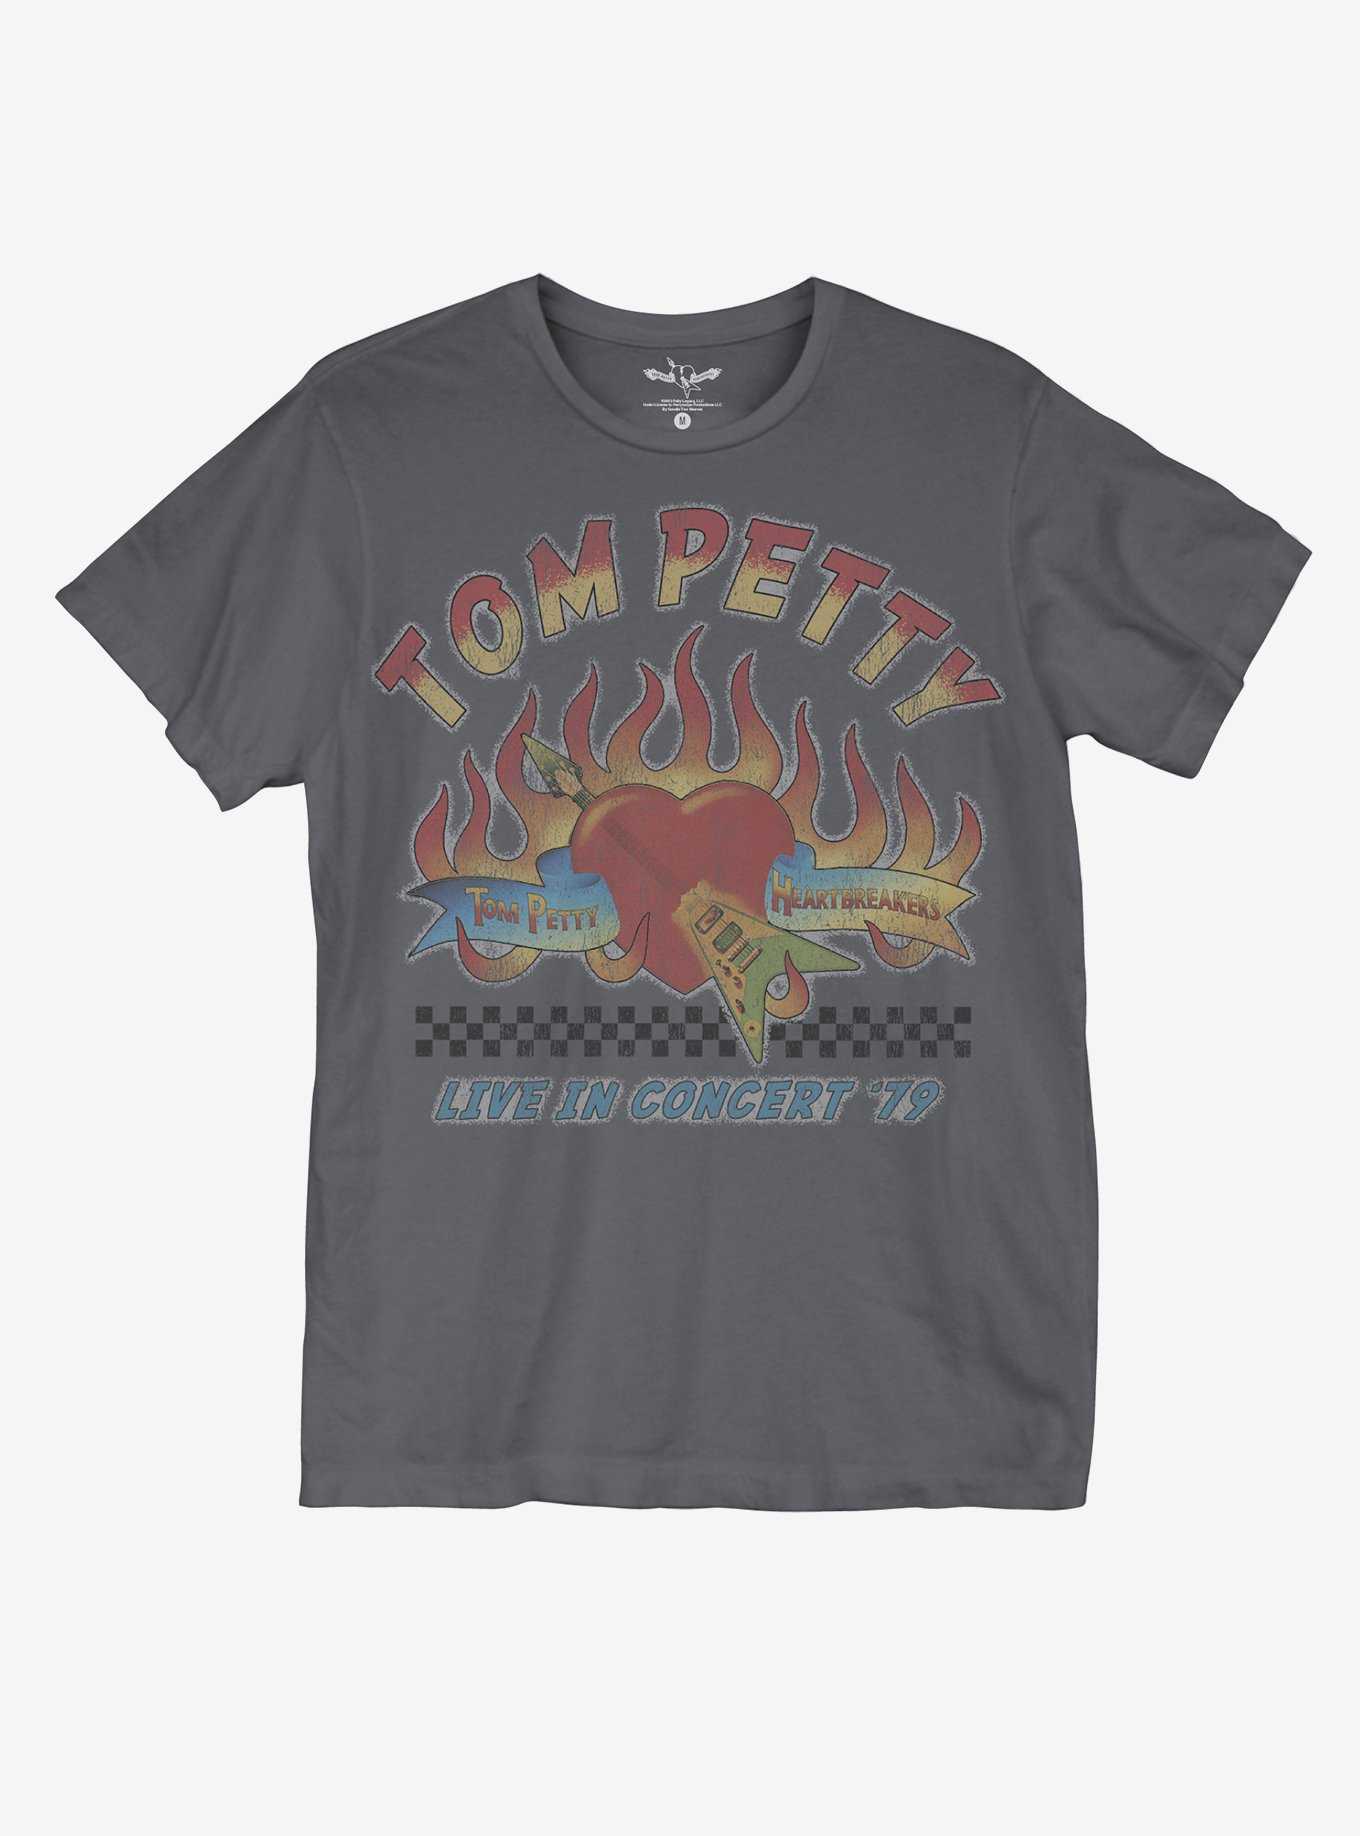 Tom Petty & The Heartbreakers Live in 1979 Boyfriend Fit Girls T-Shirt, , hi-res